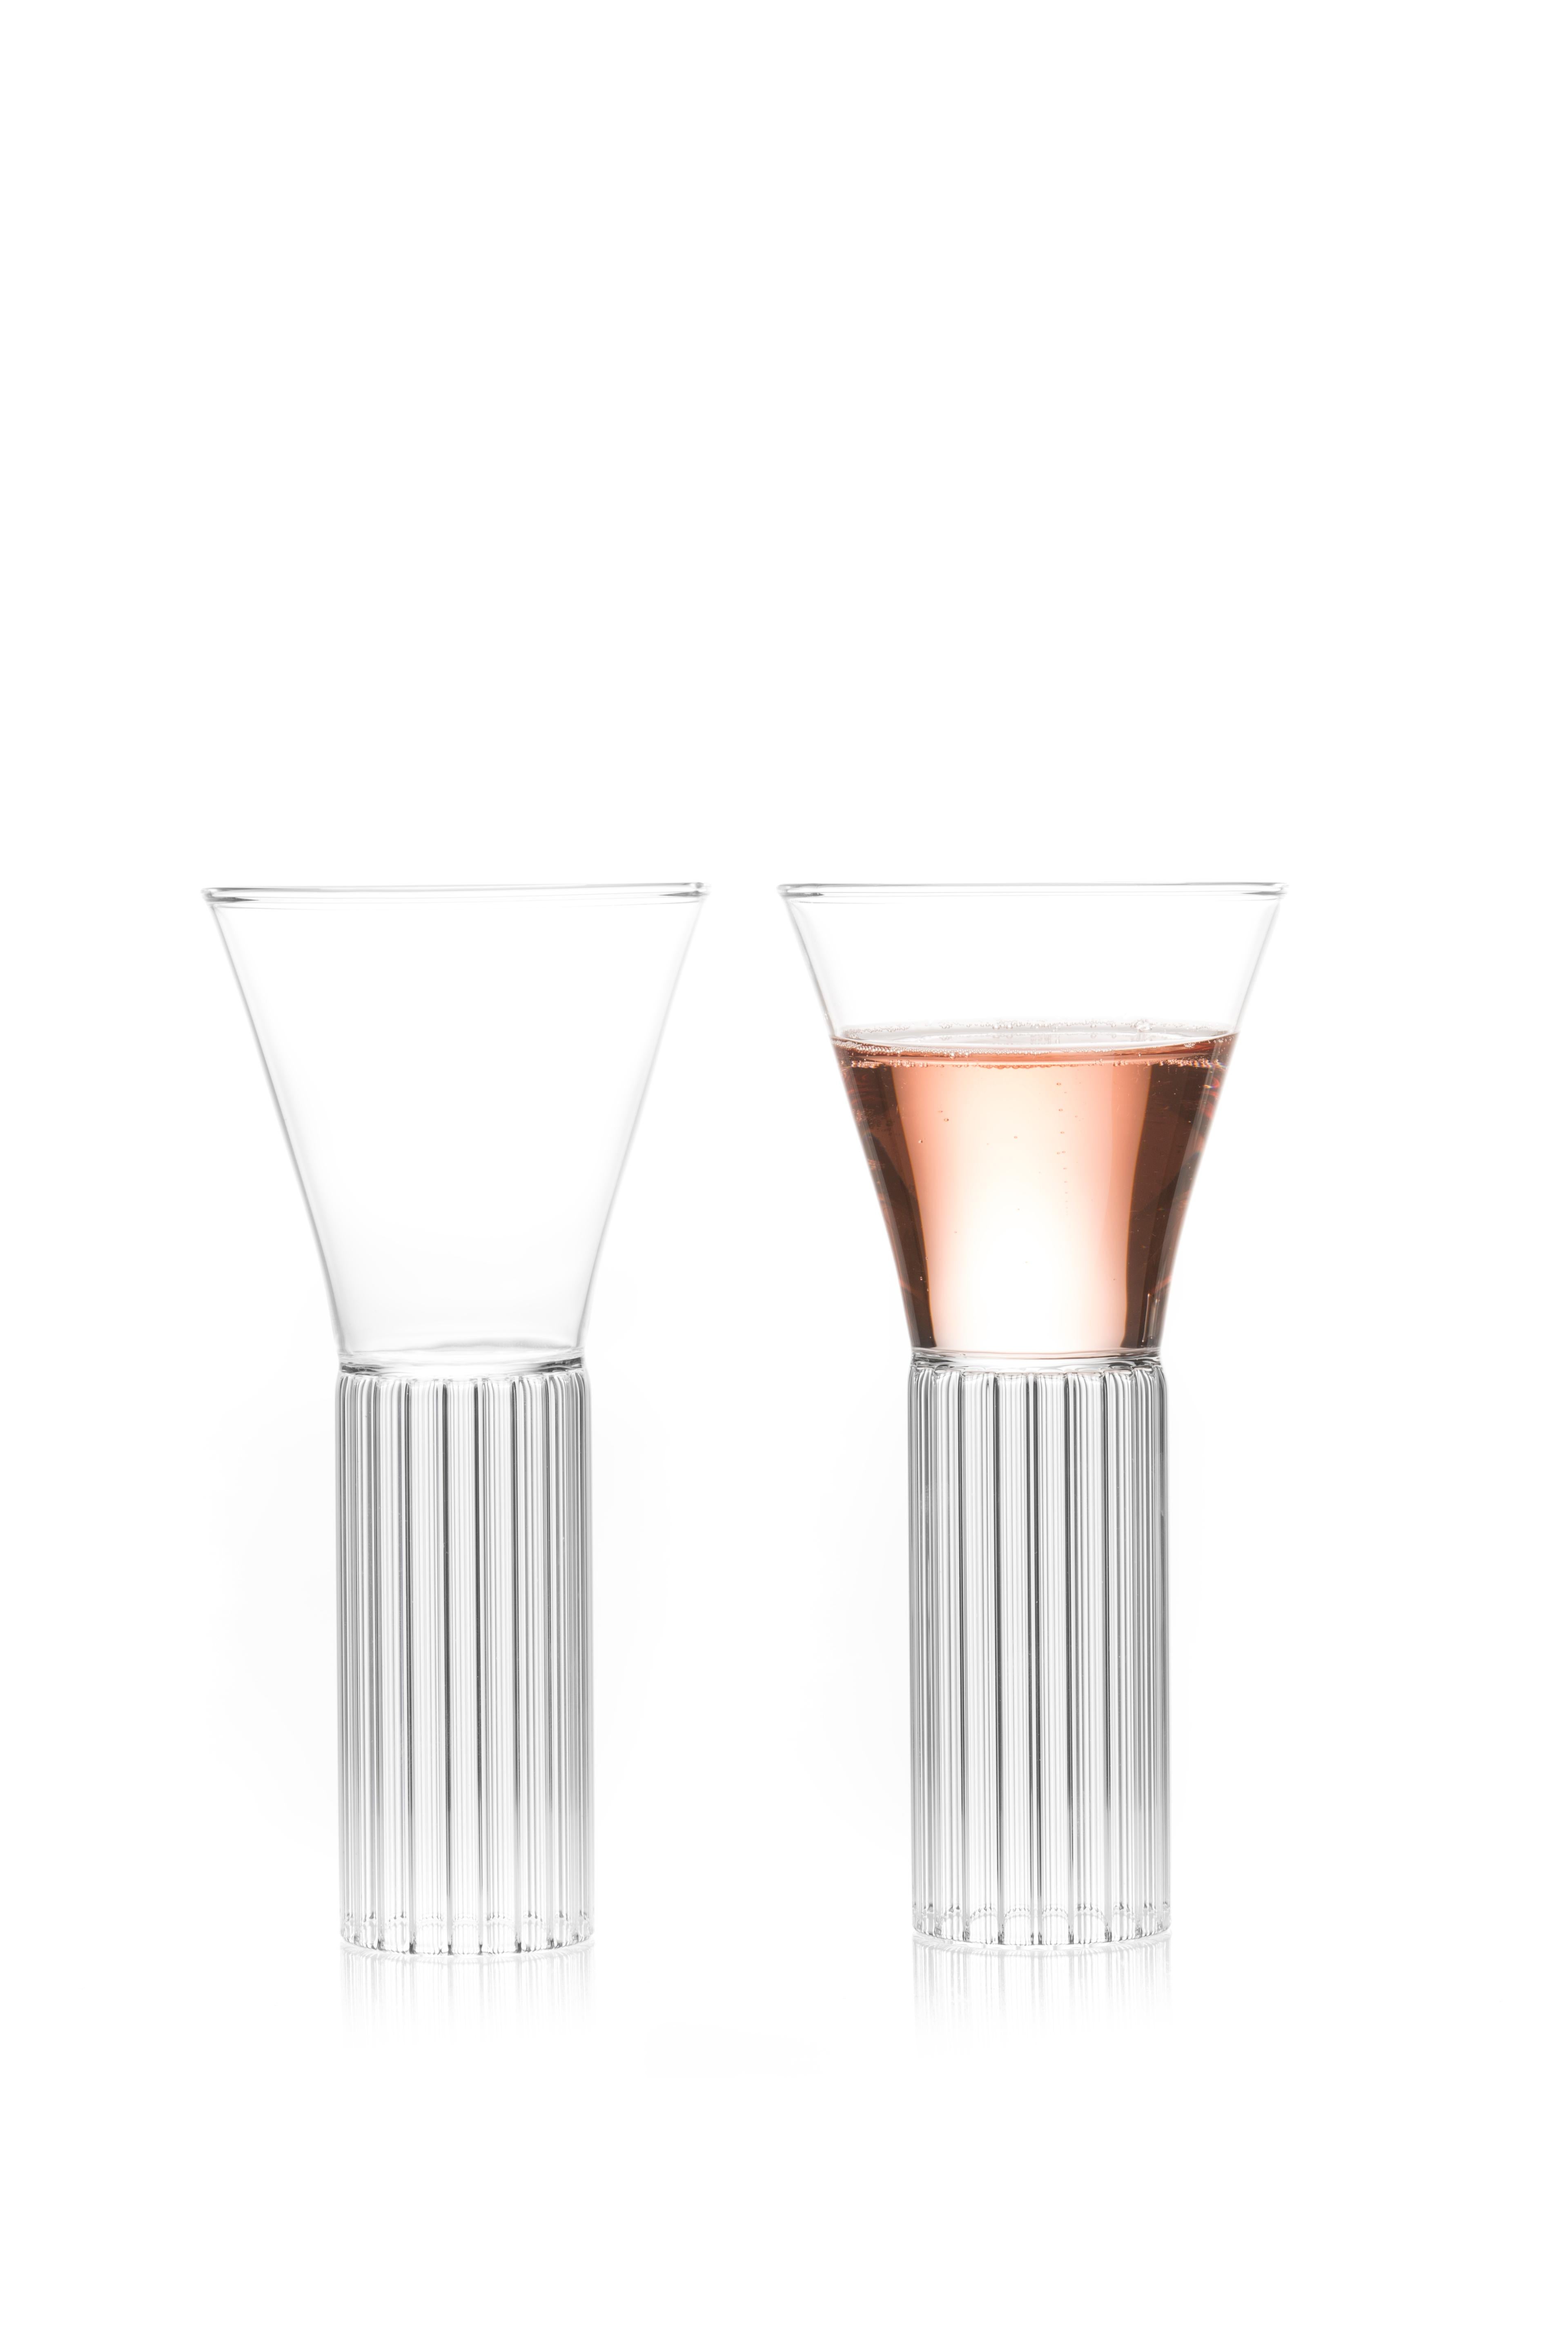 Modern fferrone Contemporary Czech Glass Bessho Carafe with Four Sofia Medium Glasses For Sale